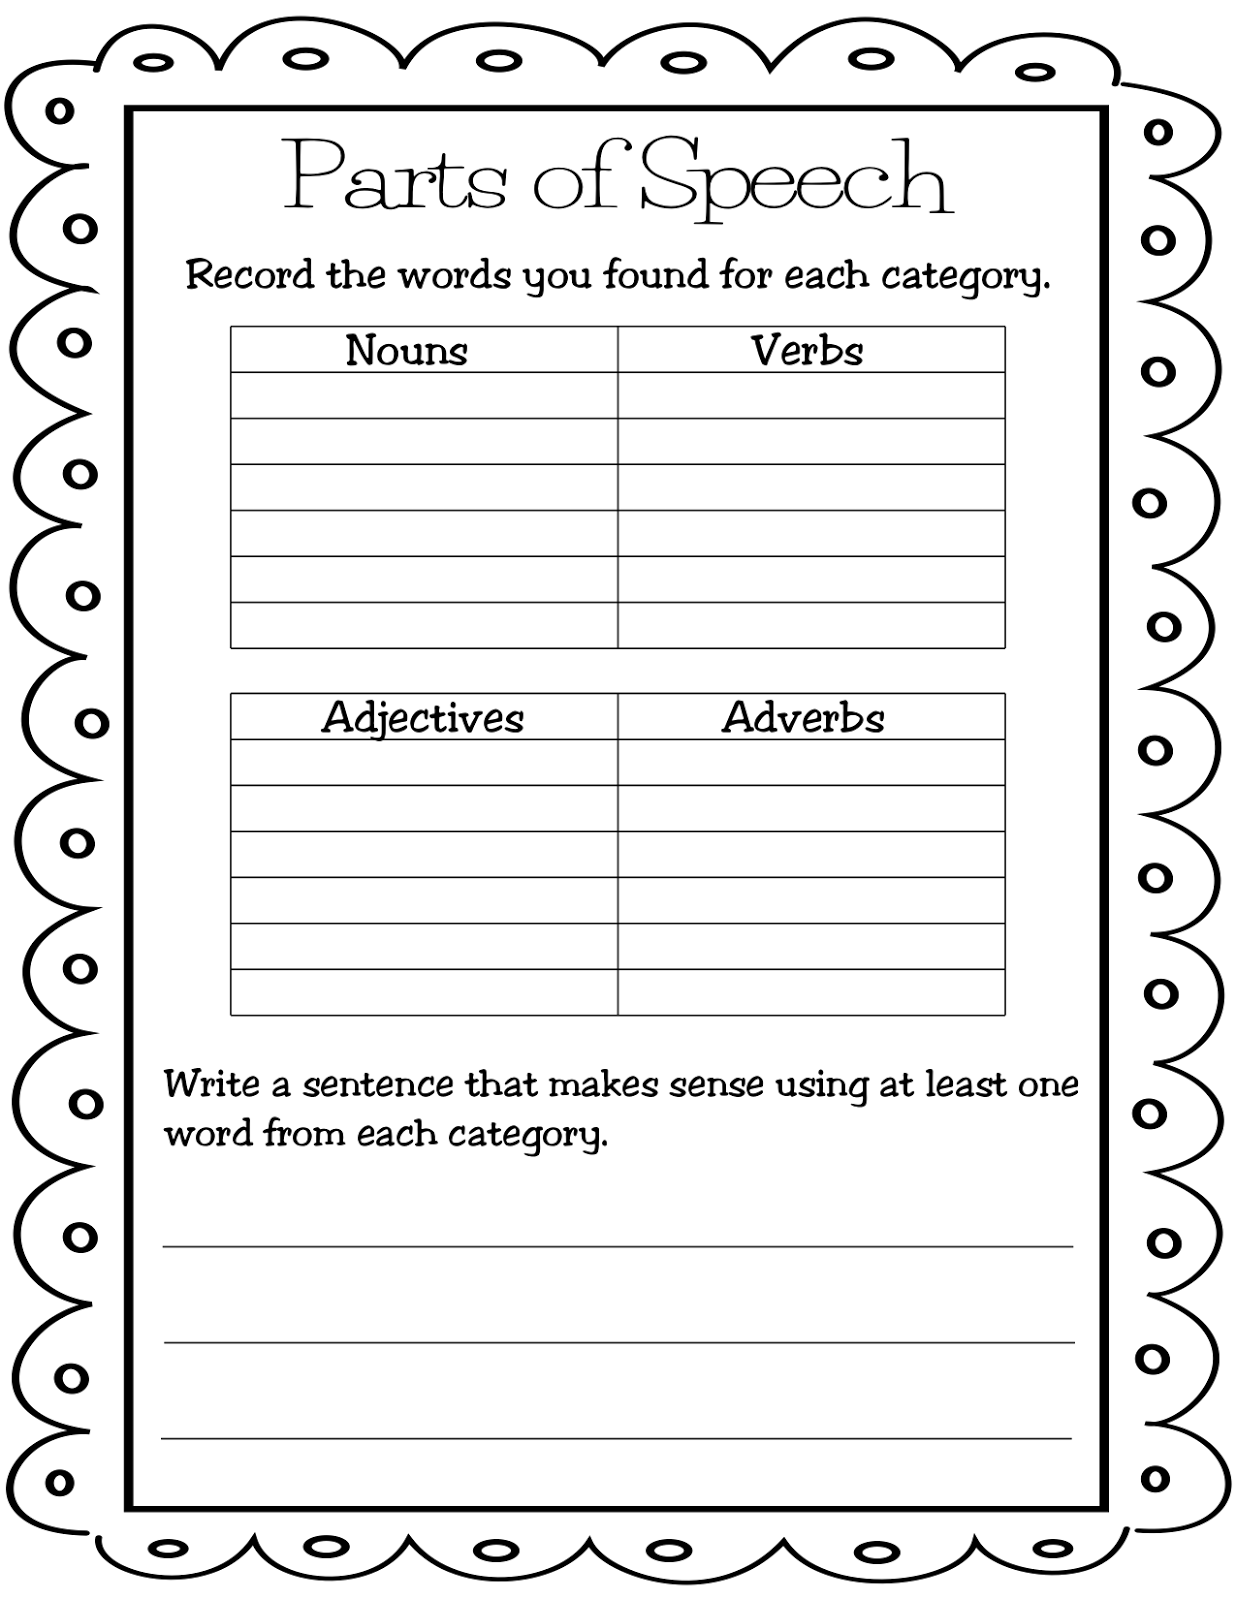 11 Best Images of Parts Of Speech Noun Worksheets - 8 Parts Speech Worksheets, Identify Parts of